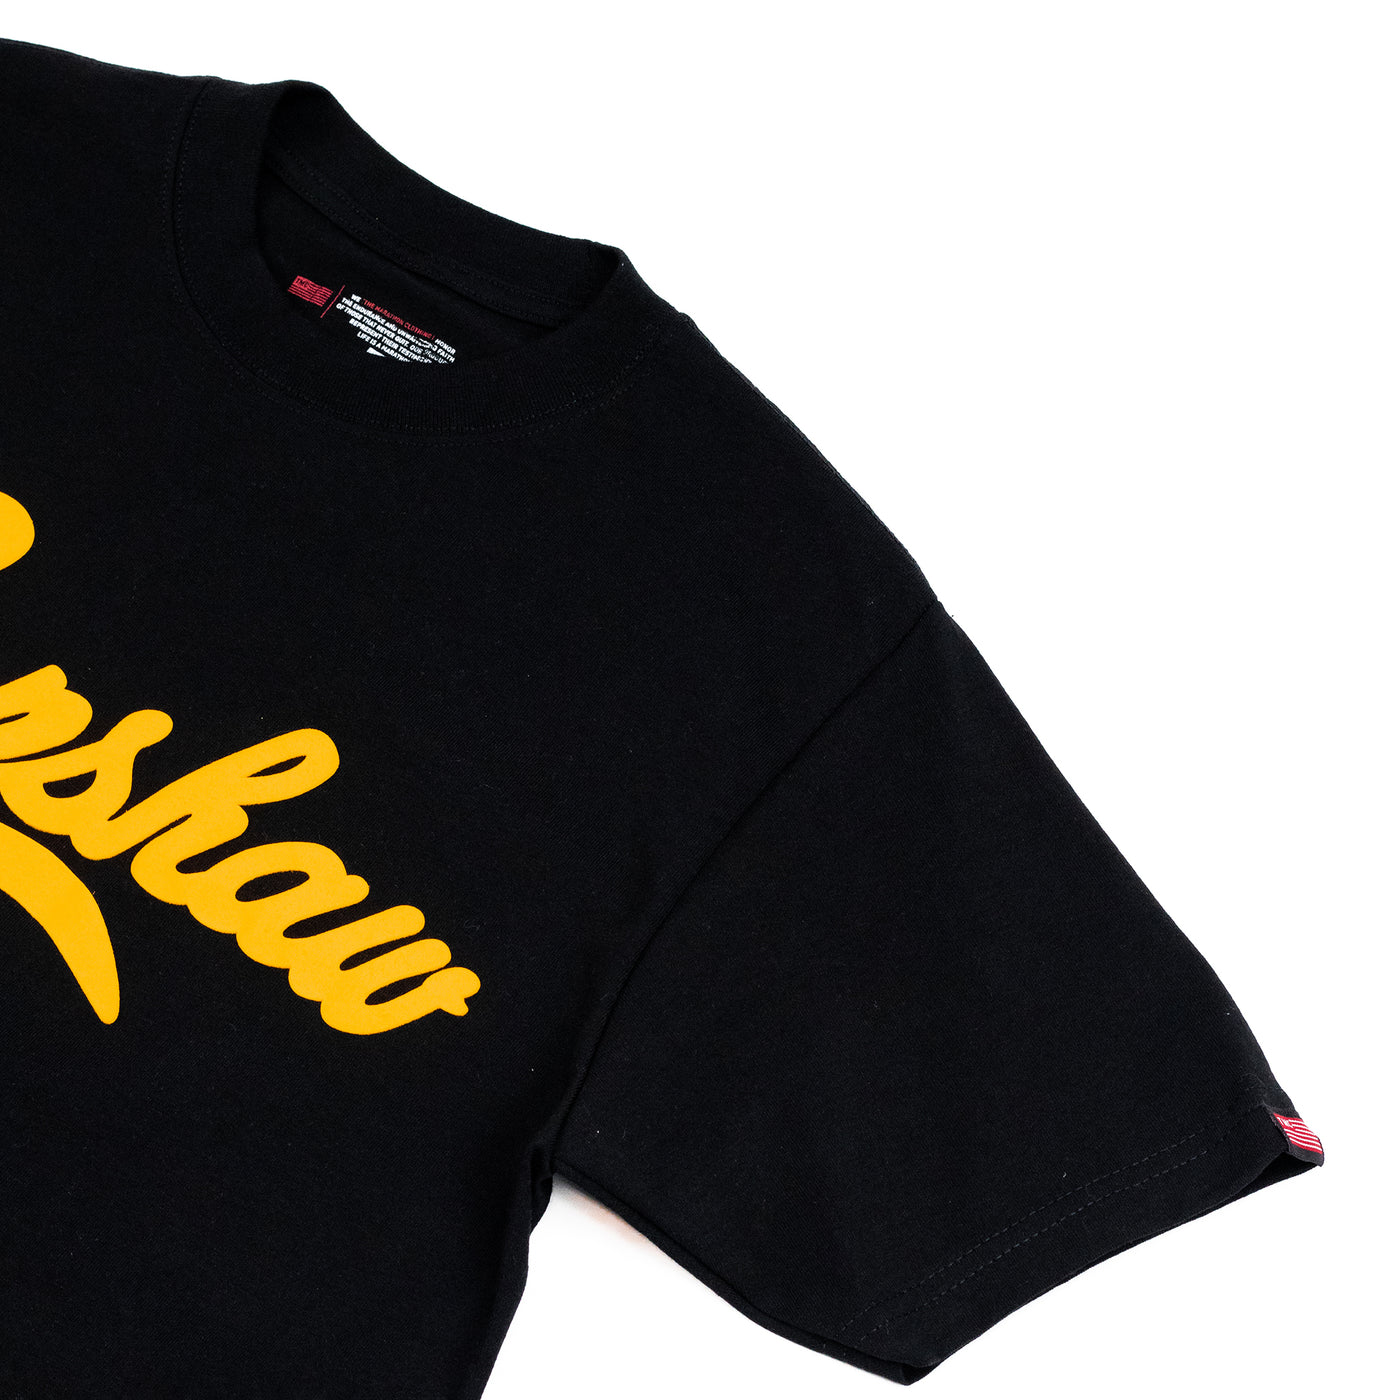 Crenshaw T-Shirt - Black/Gold - Sleeve